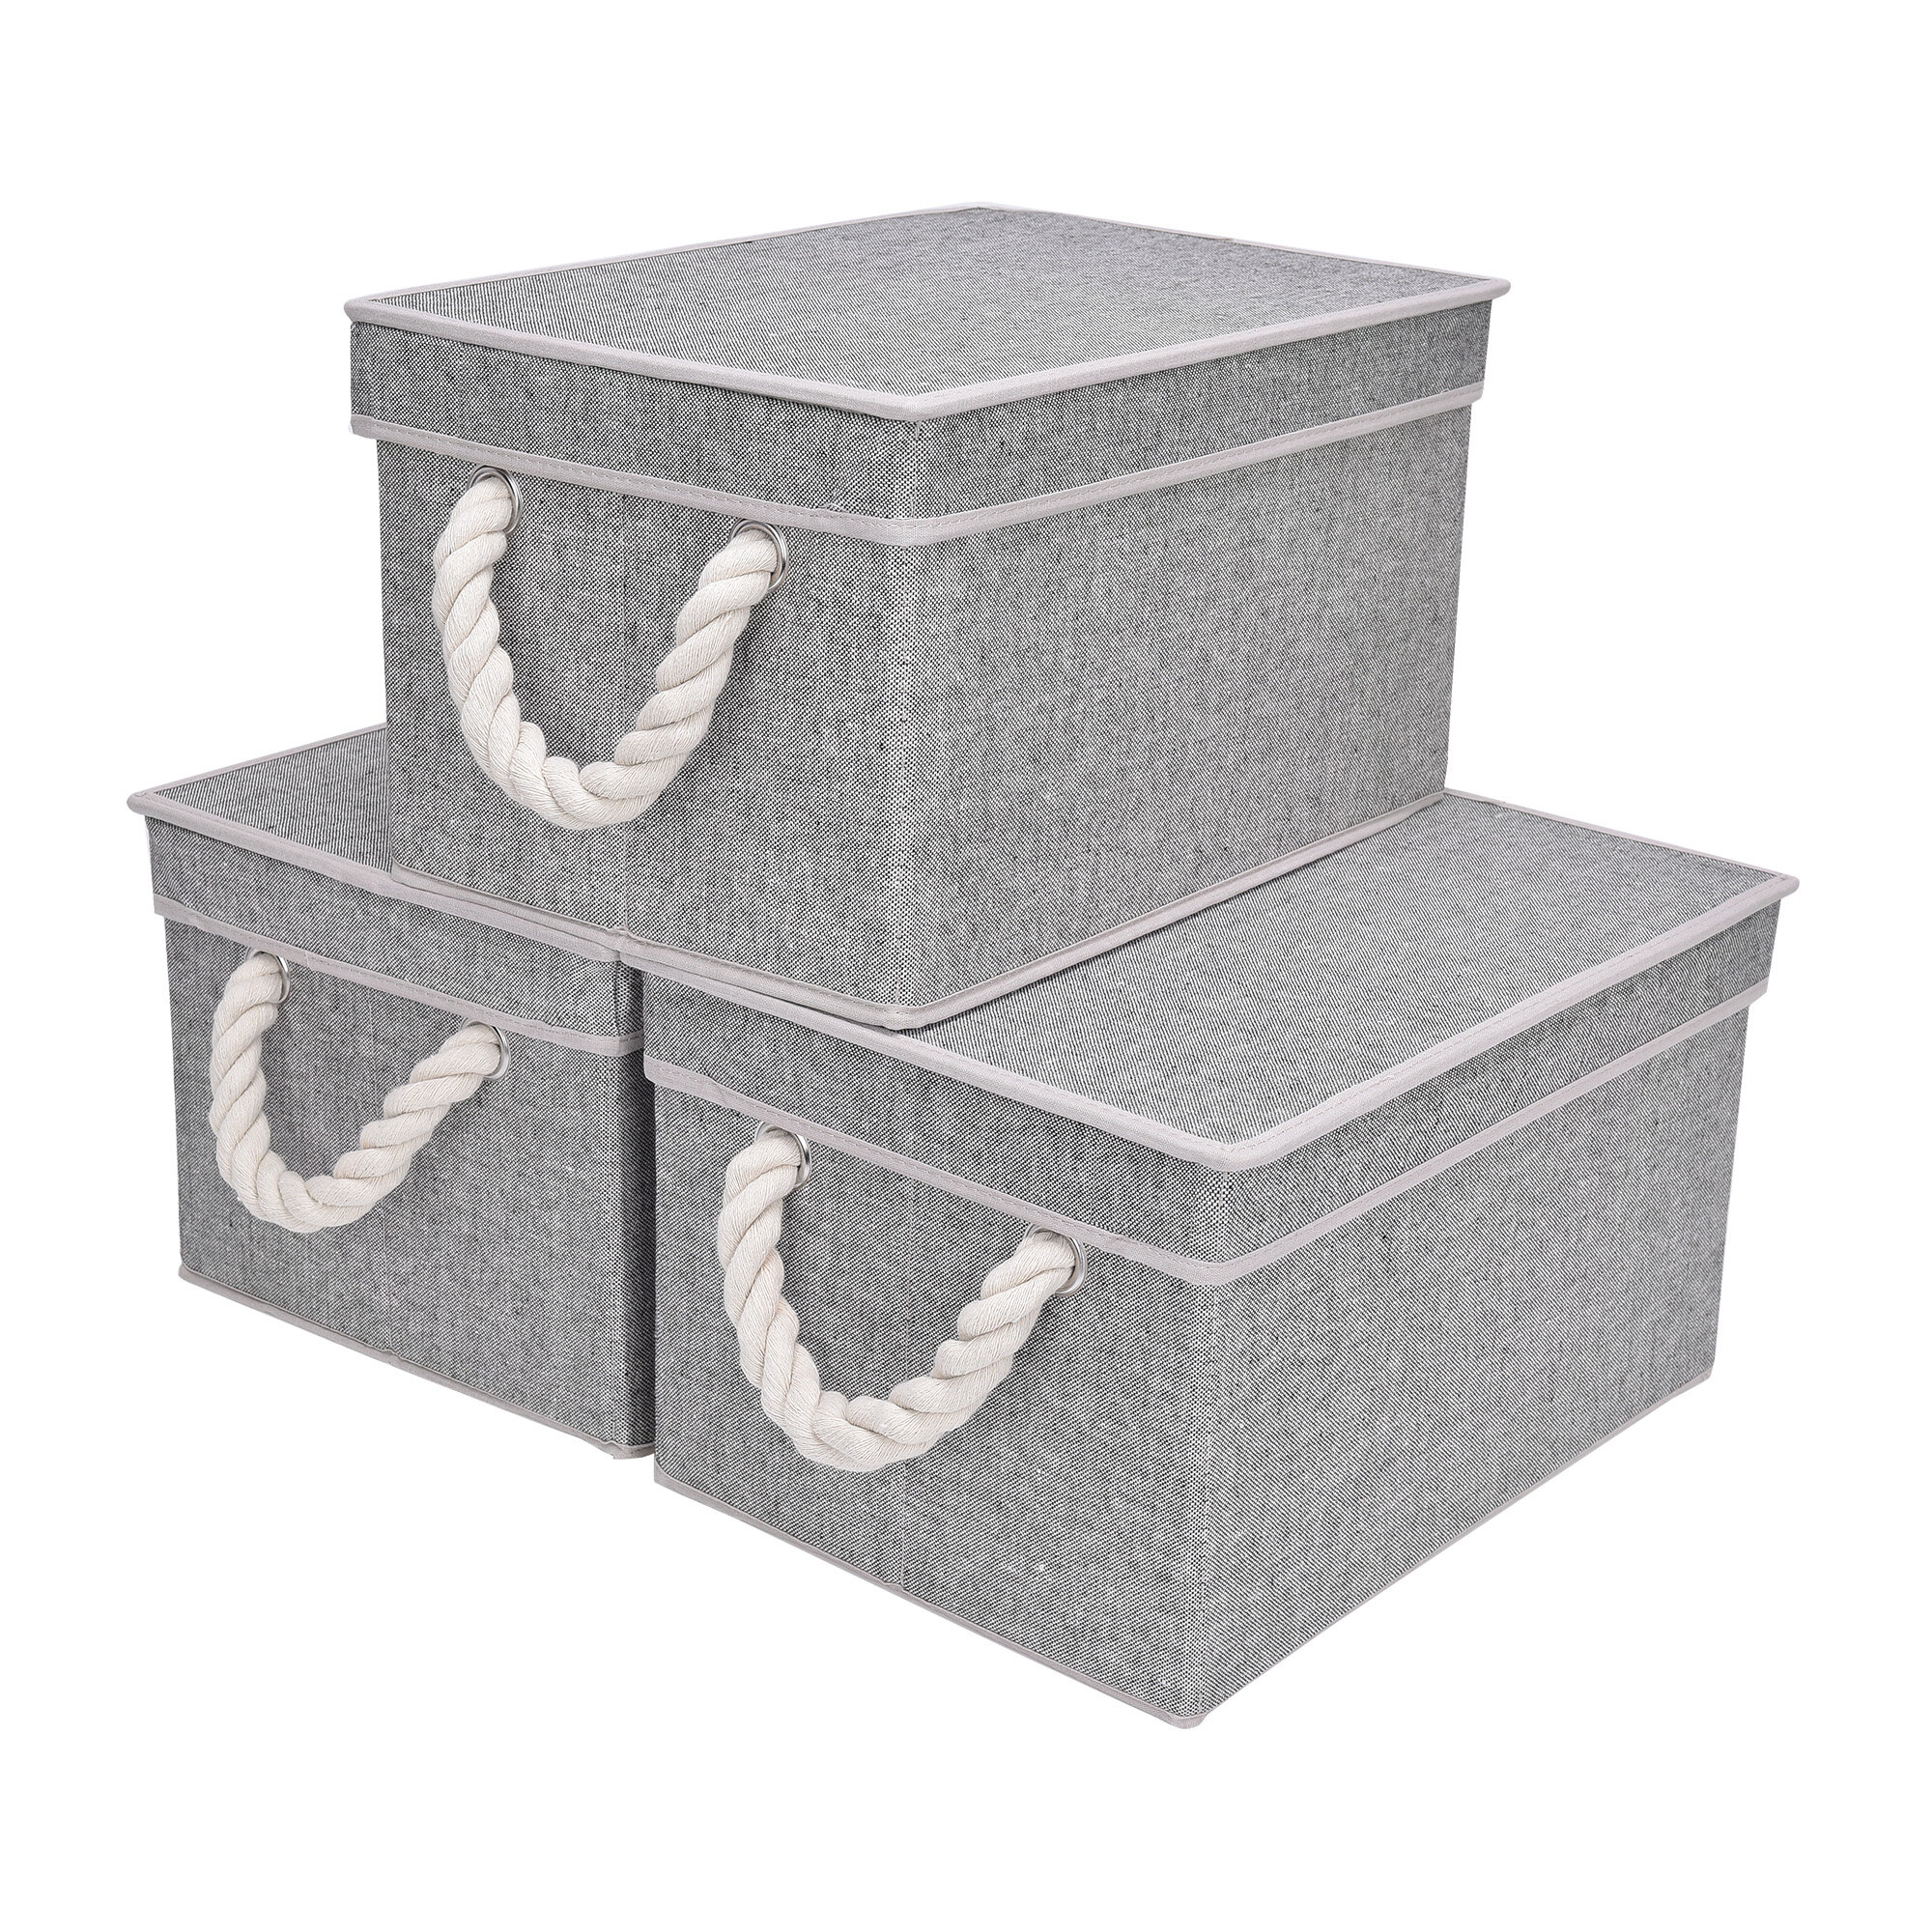 fabric storage bins with lids